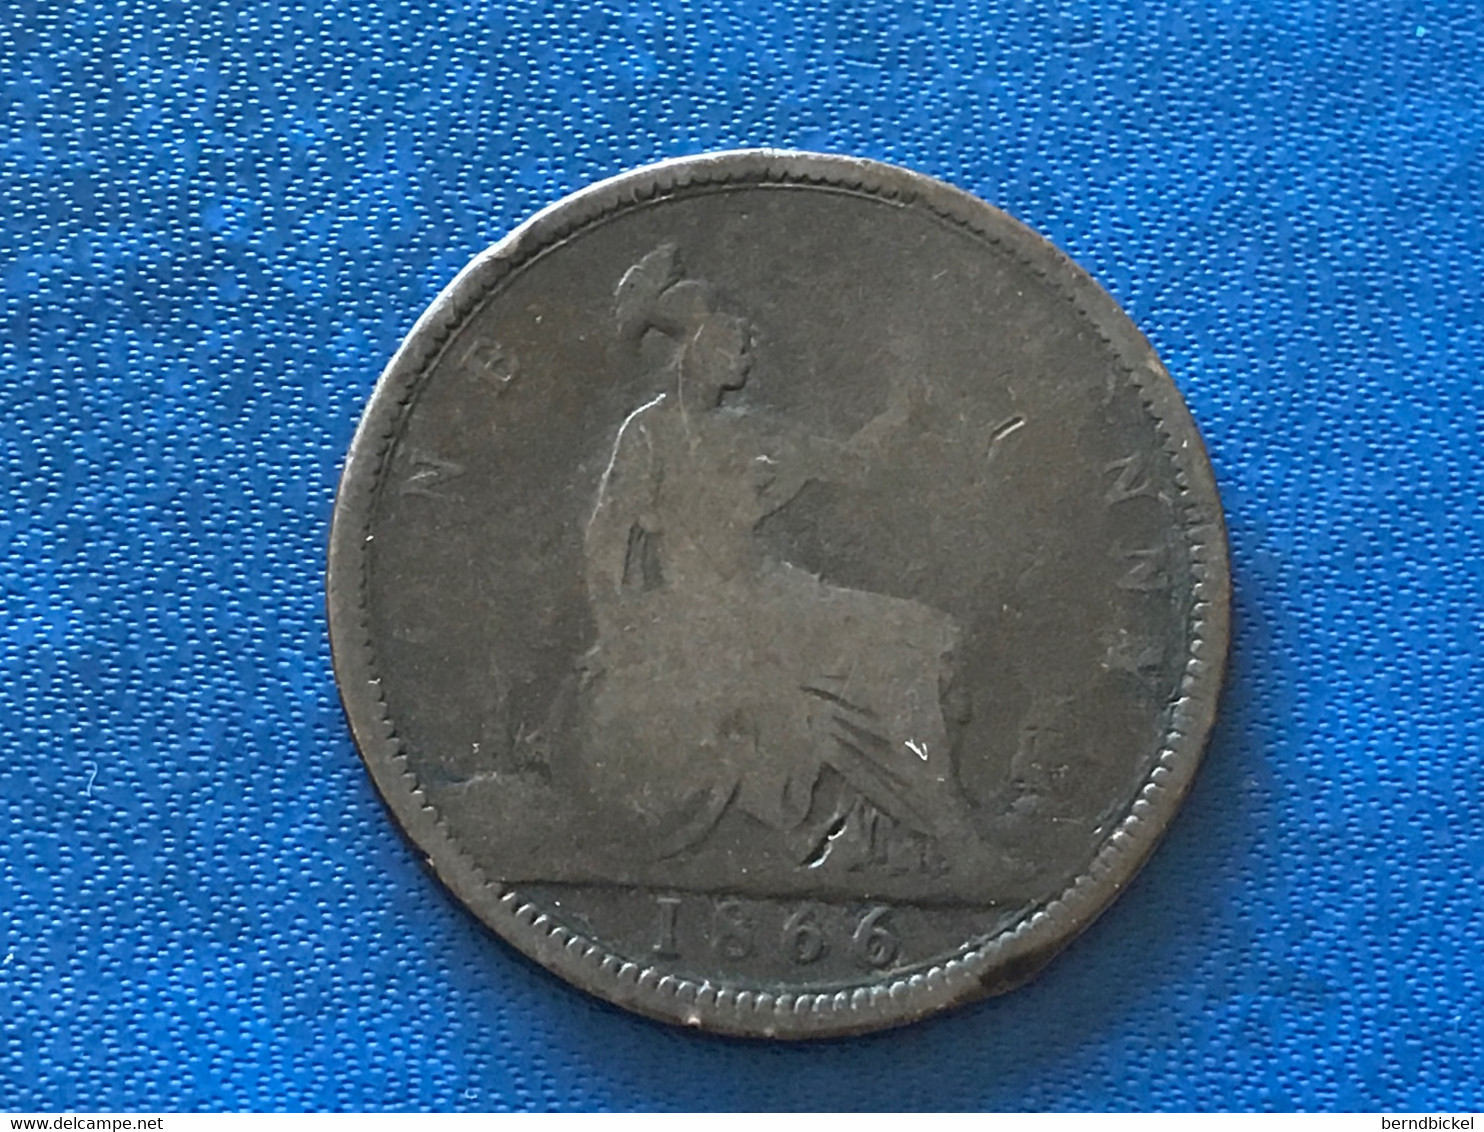 Münze Münzen Umlaufmünze Großbritannien 1 Penny 1866 - D. 1 Penny